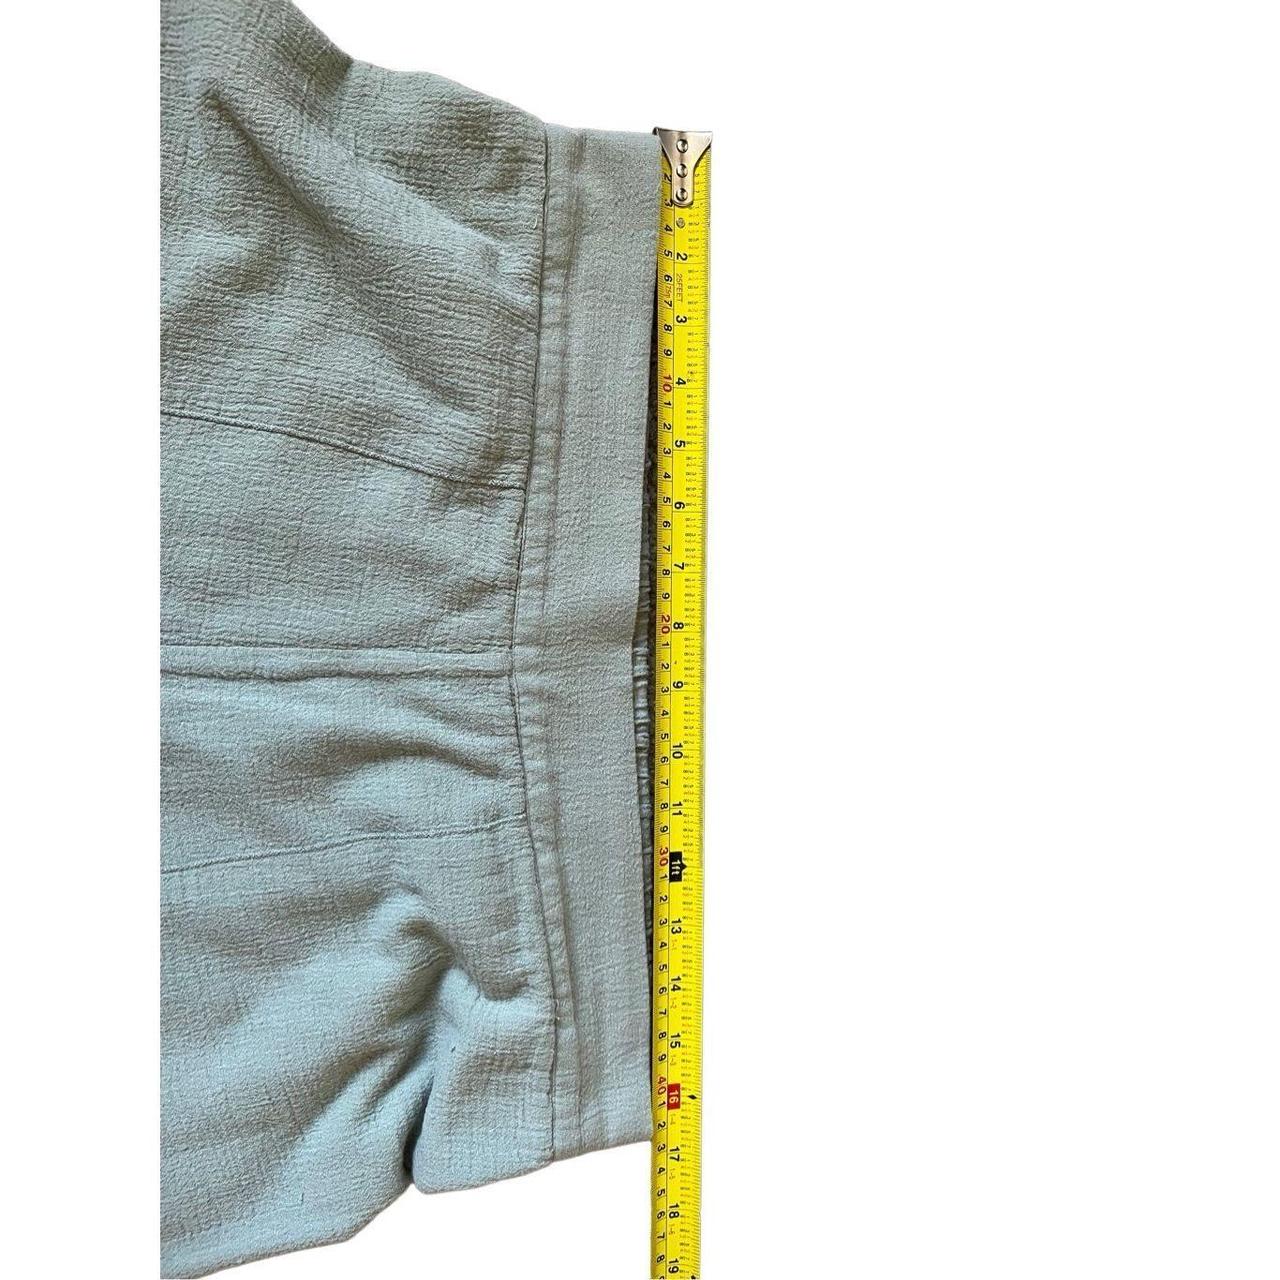 Soft Surroundings Gauze Pants Black Size Tall Small - Depop